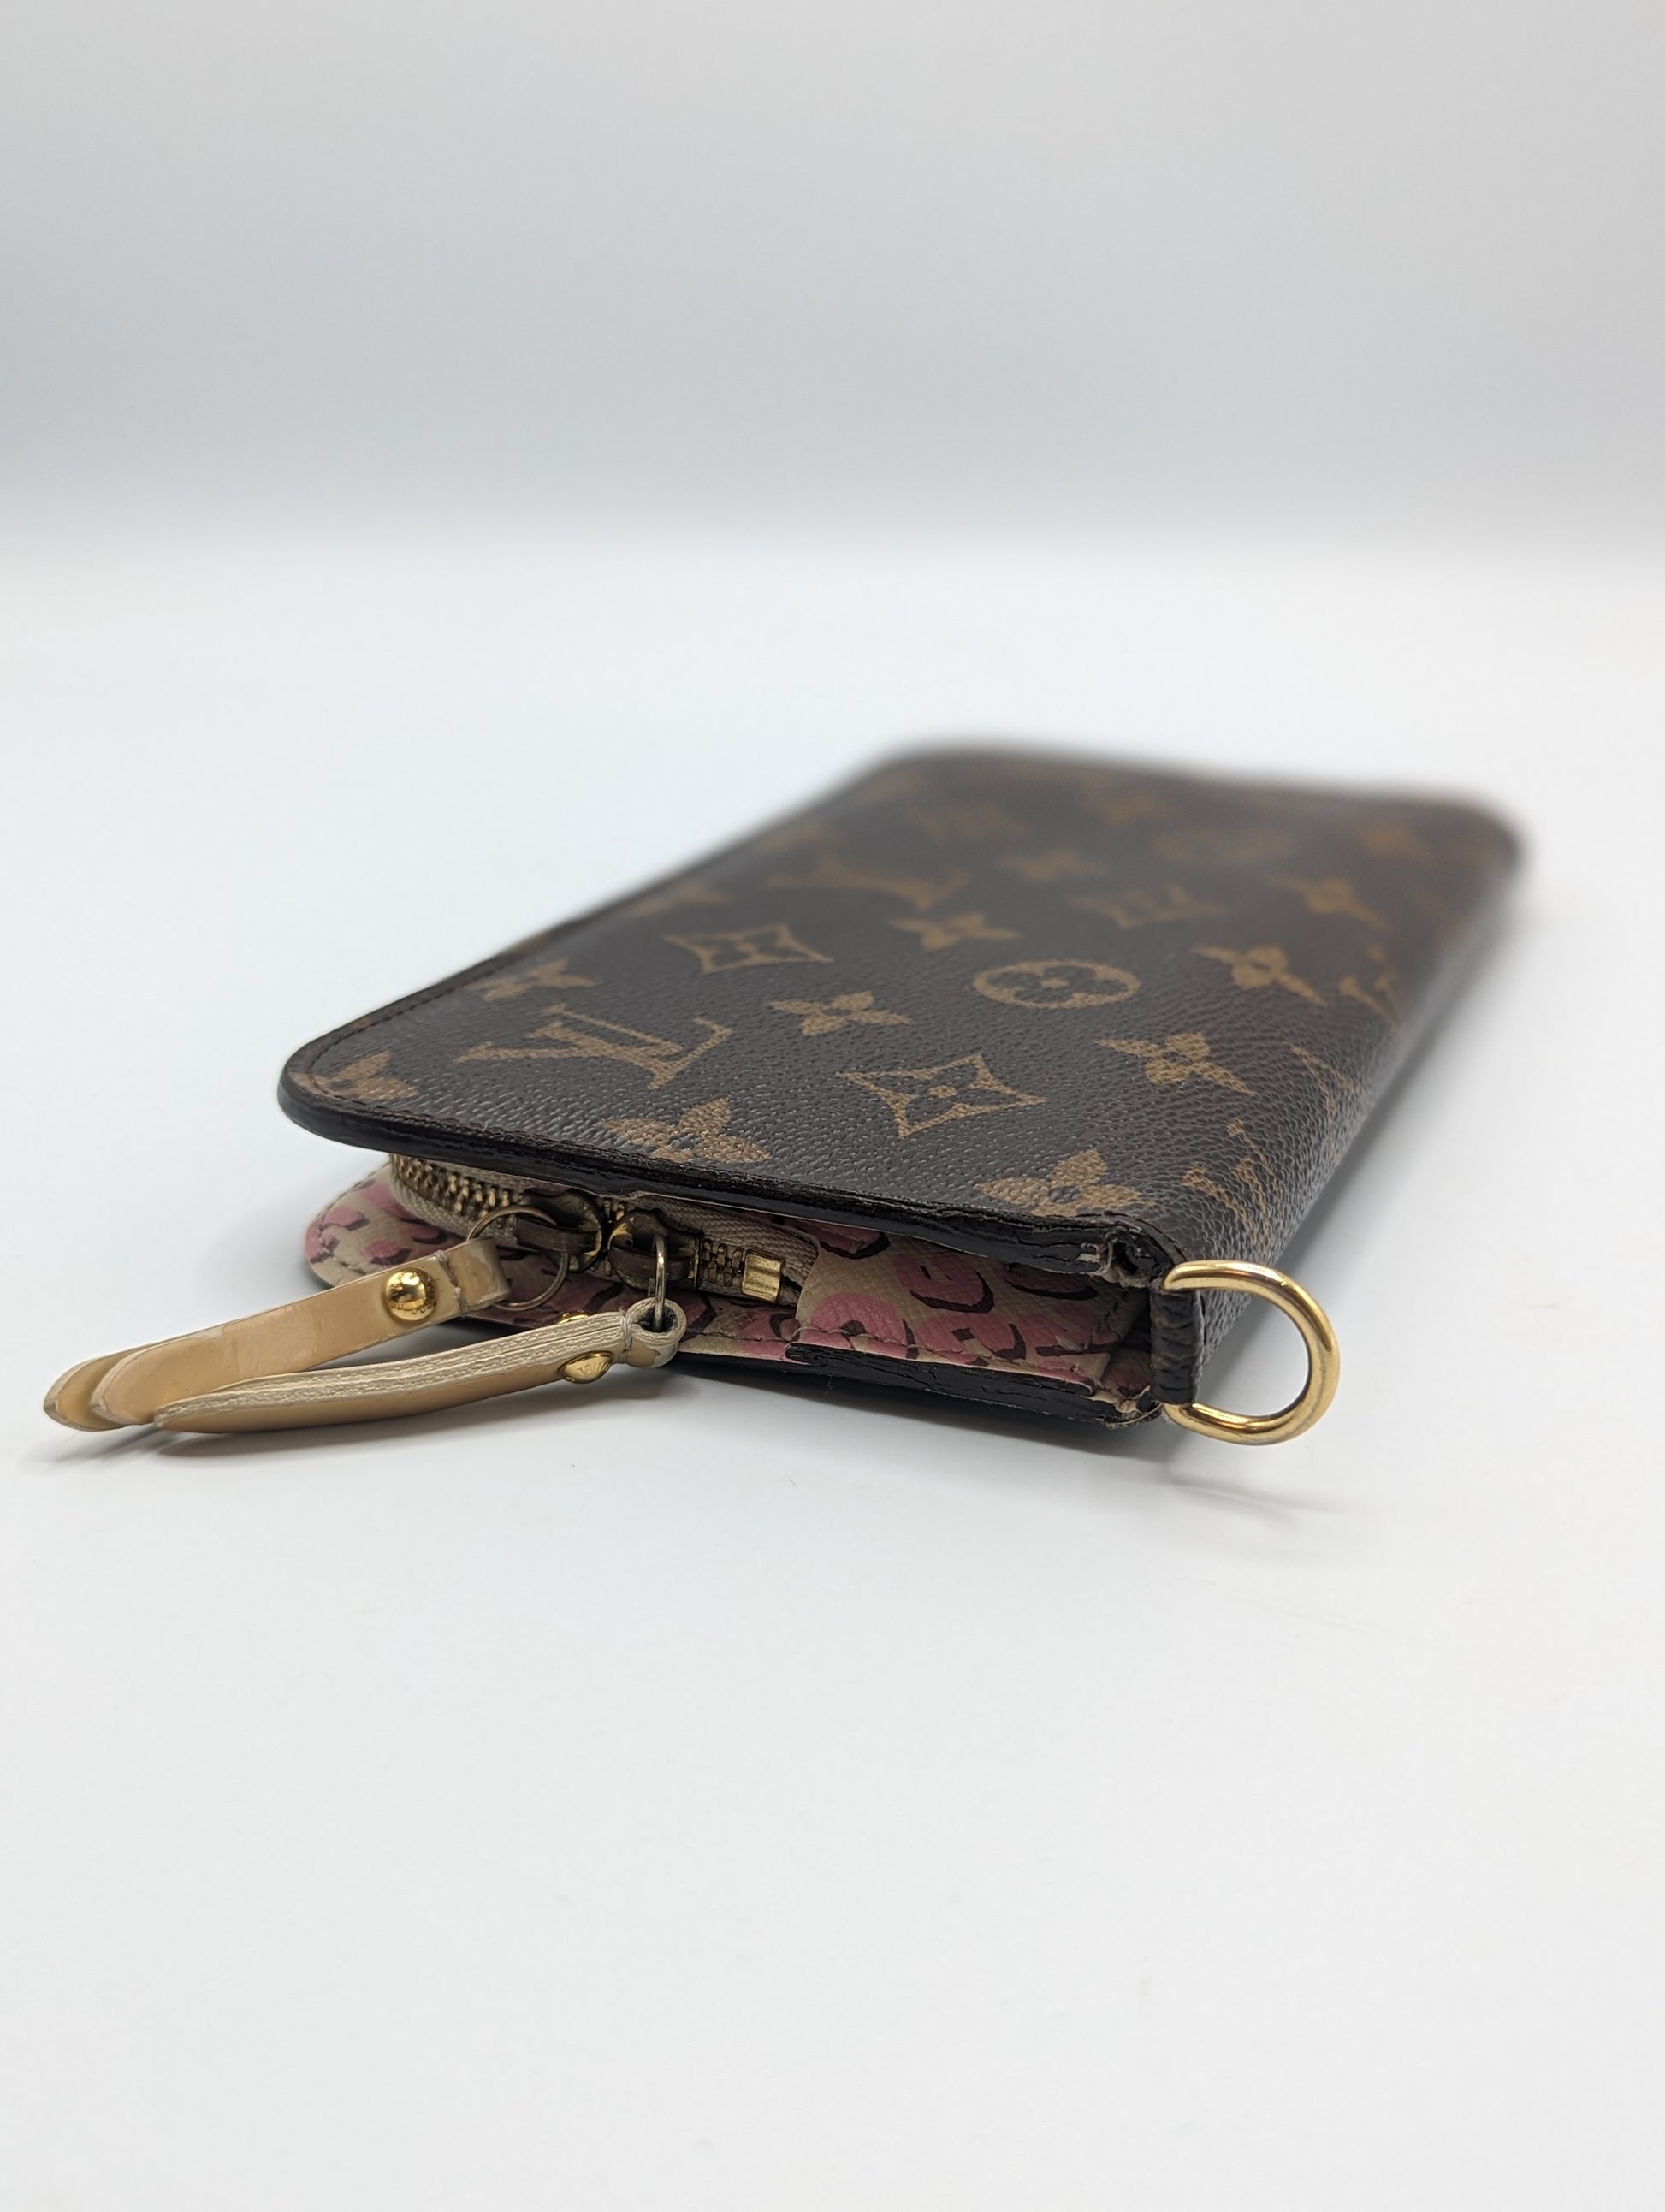 Louis Vuitton Leopard Zippy Wallet